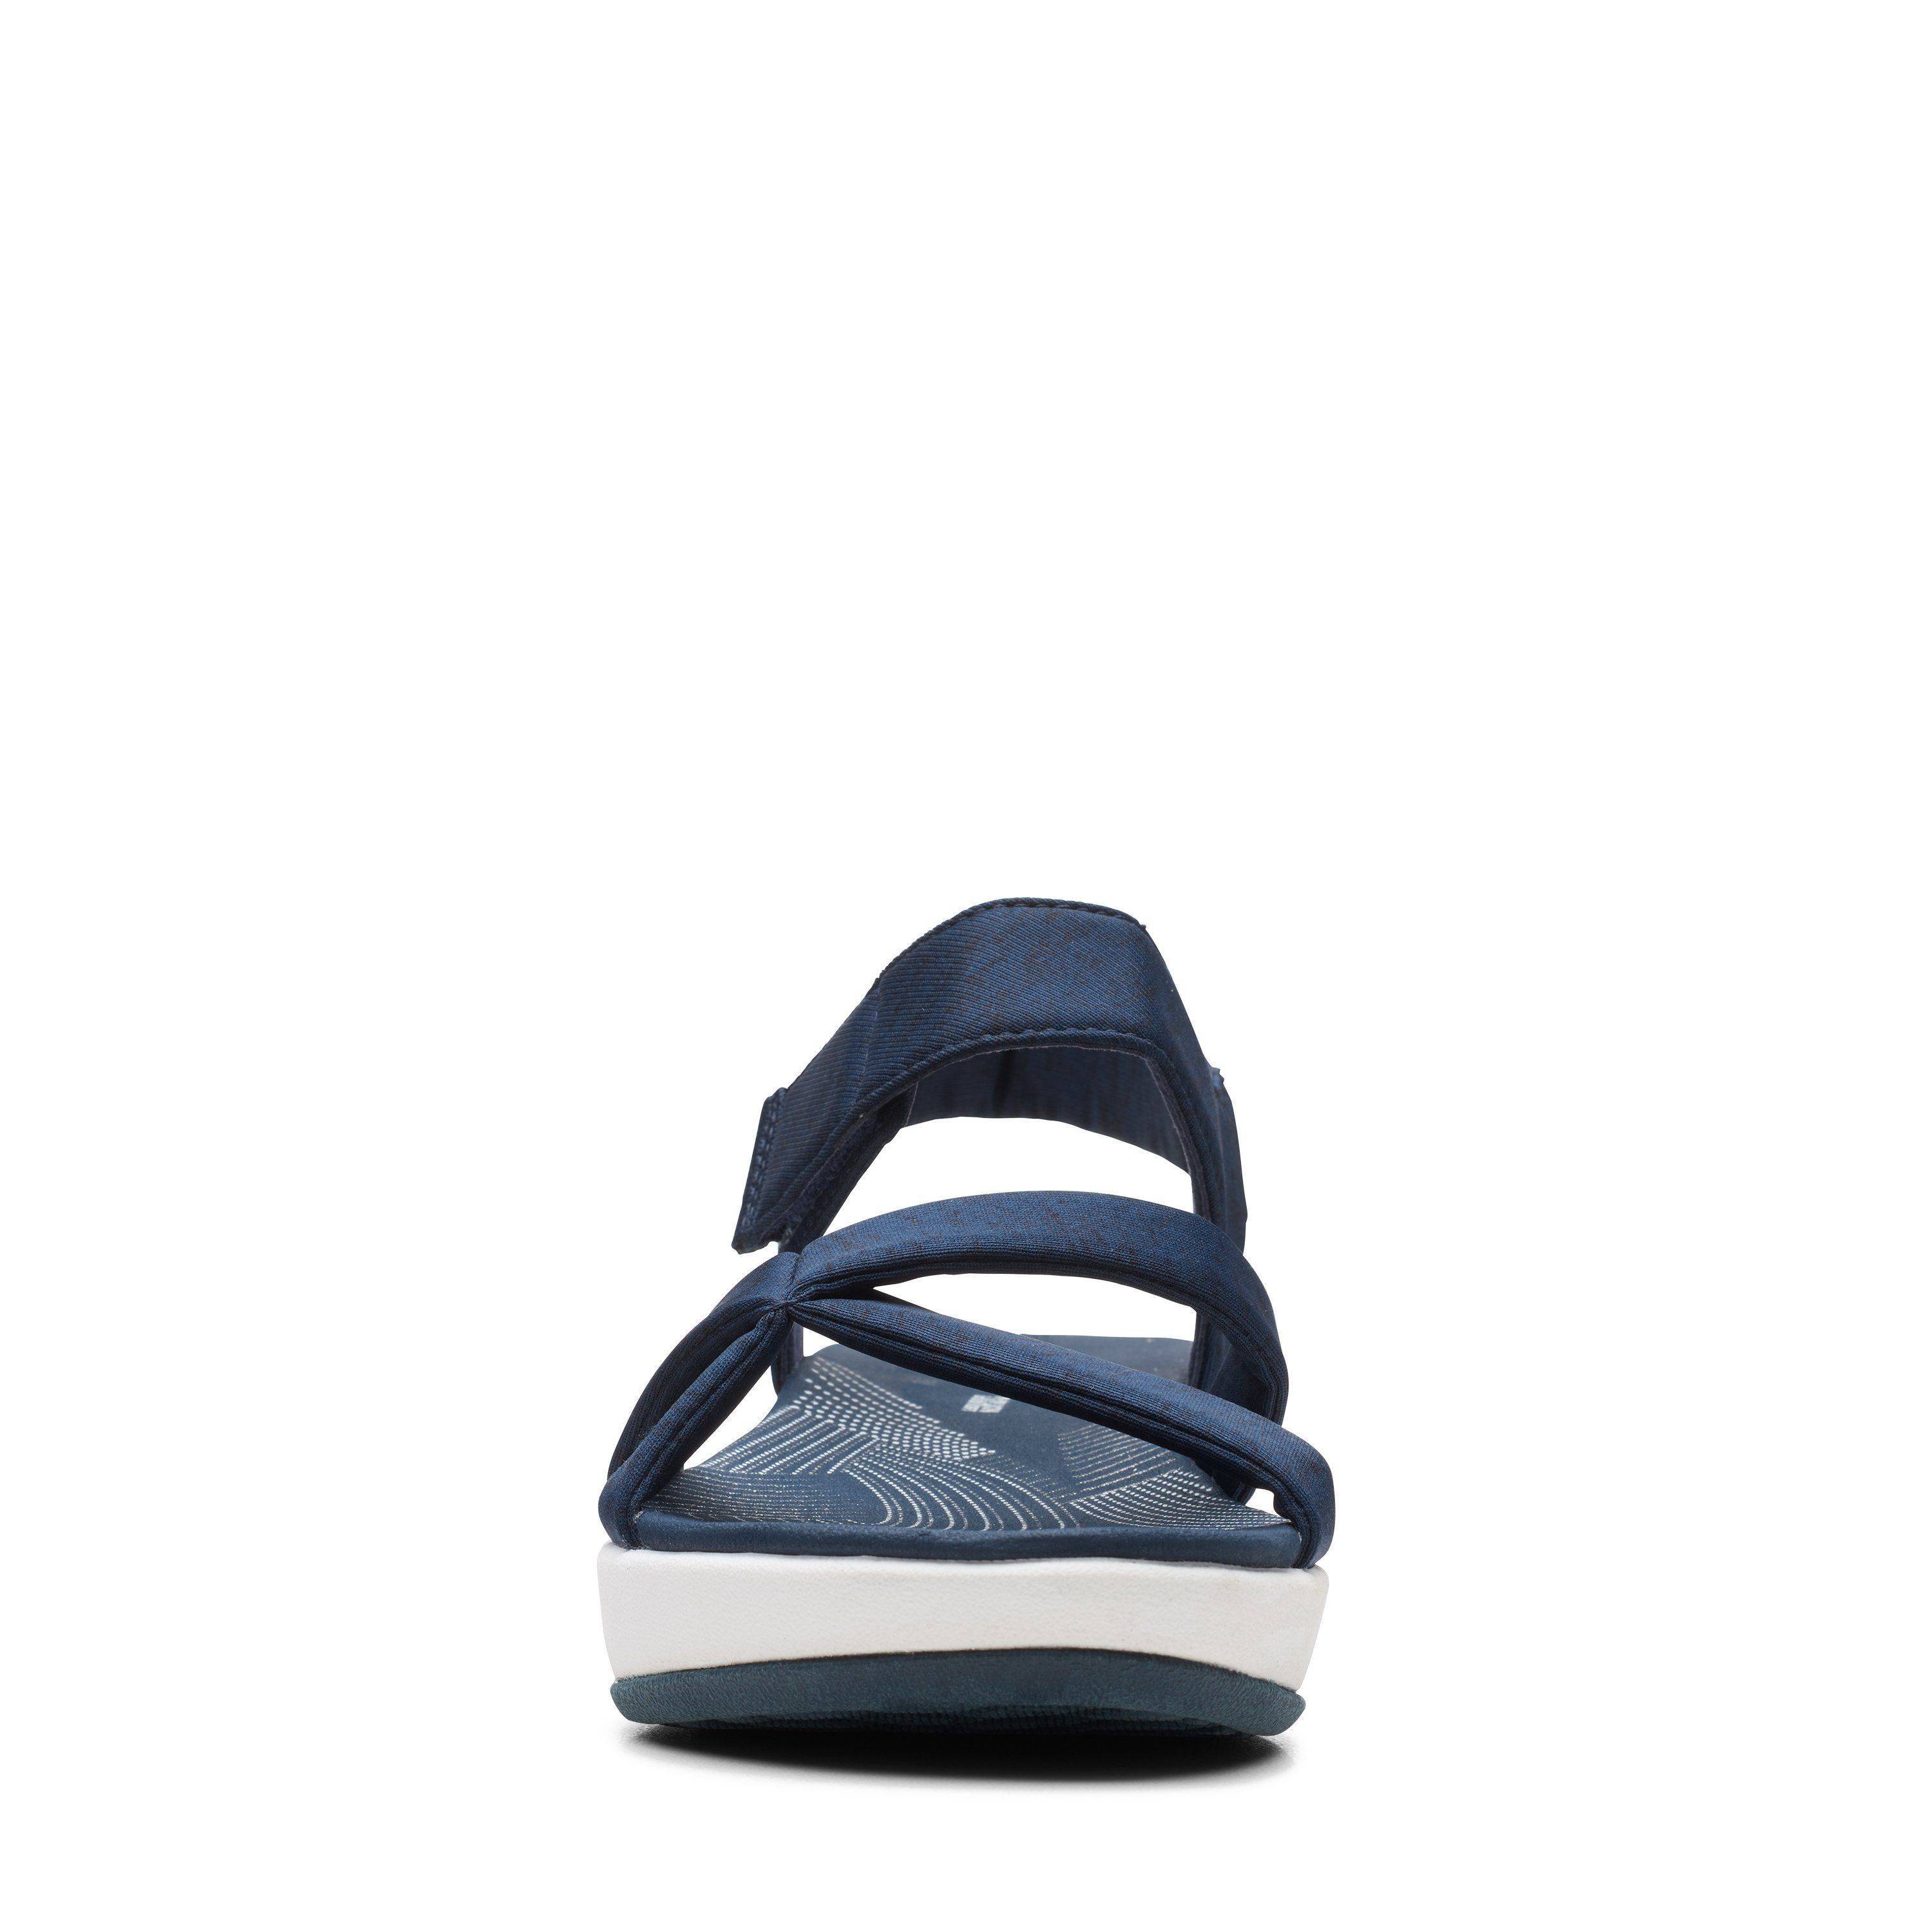 Женские сандалии Clarks, синие, цвет синий, размер 39 - фото 3